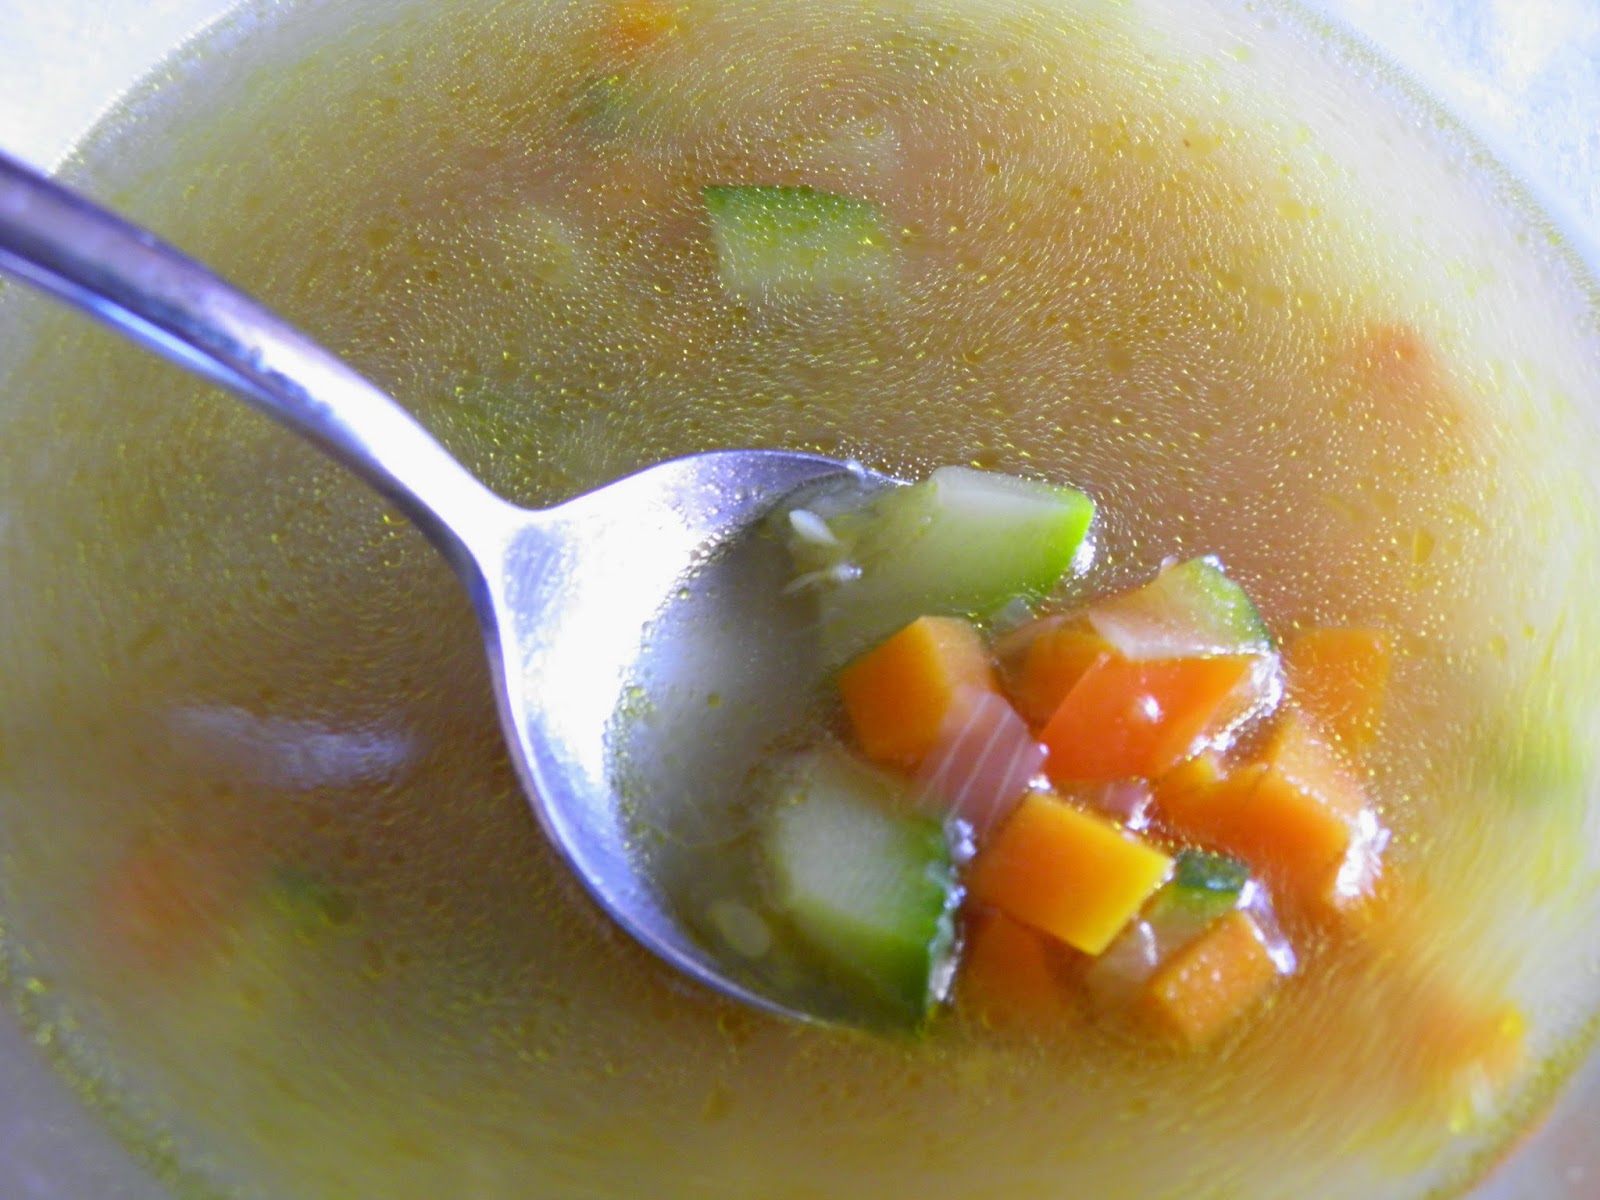 Sopa De Verduras
